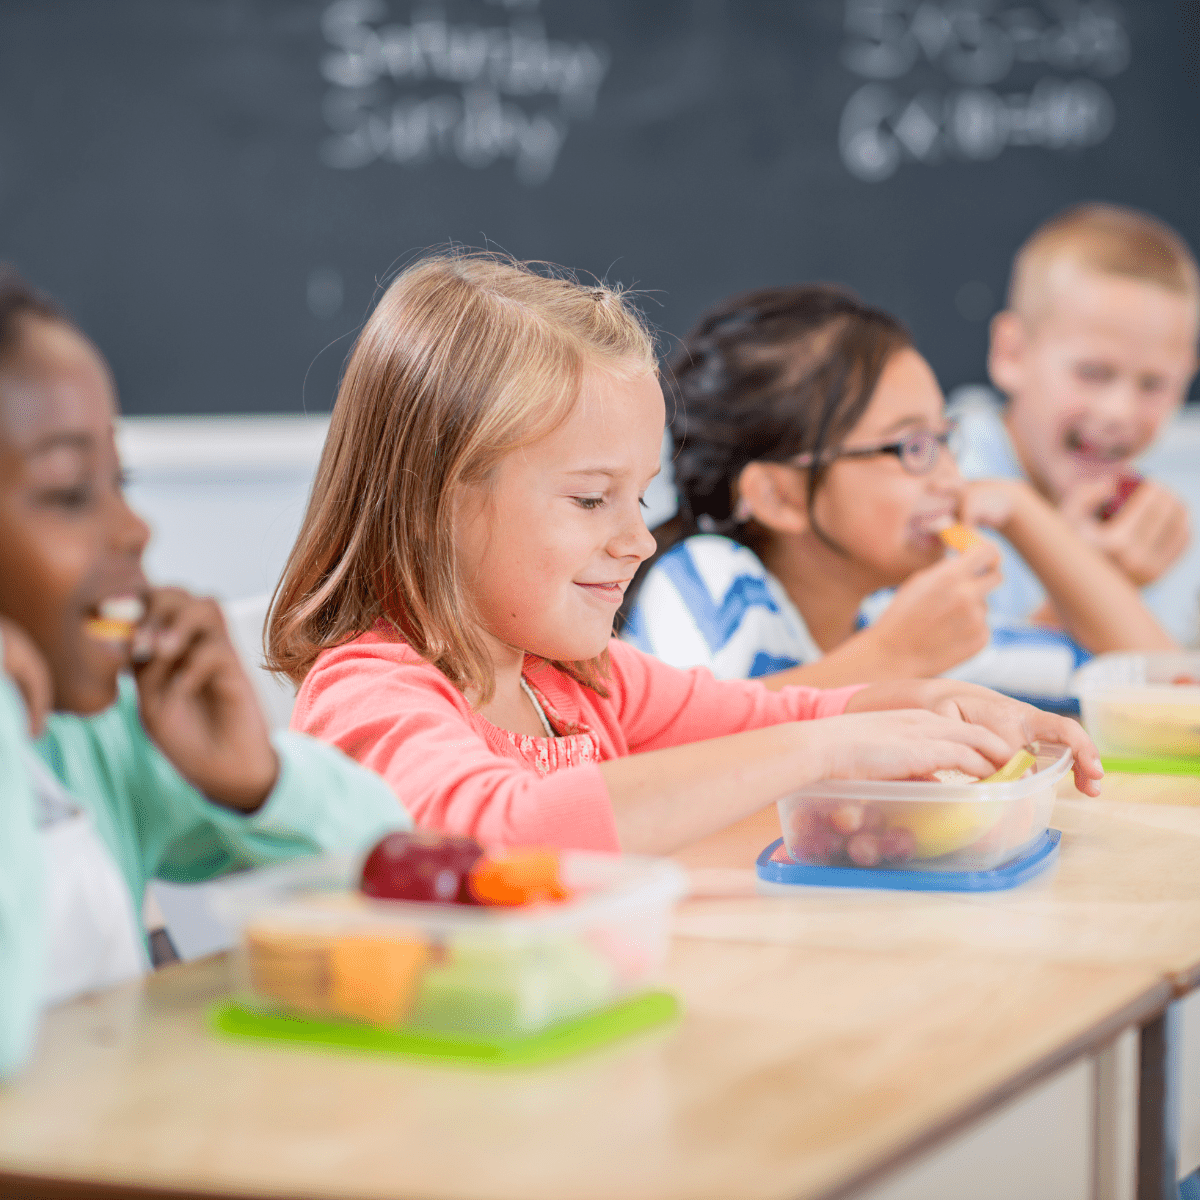 Four children eating snacks at their school desks